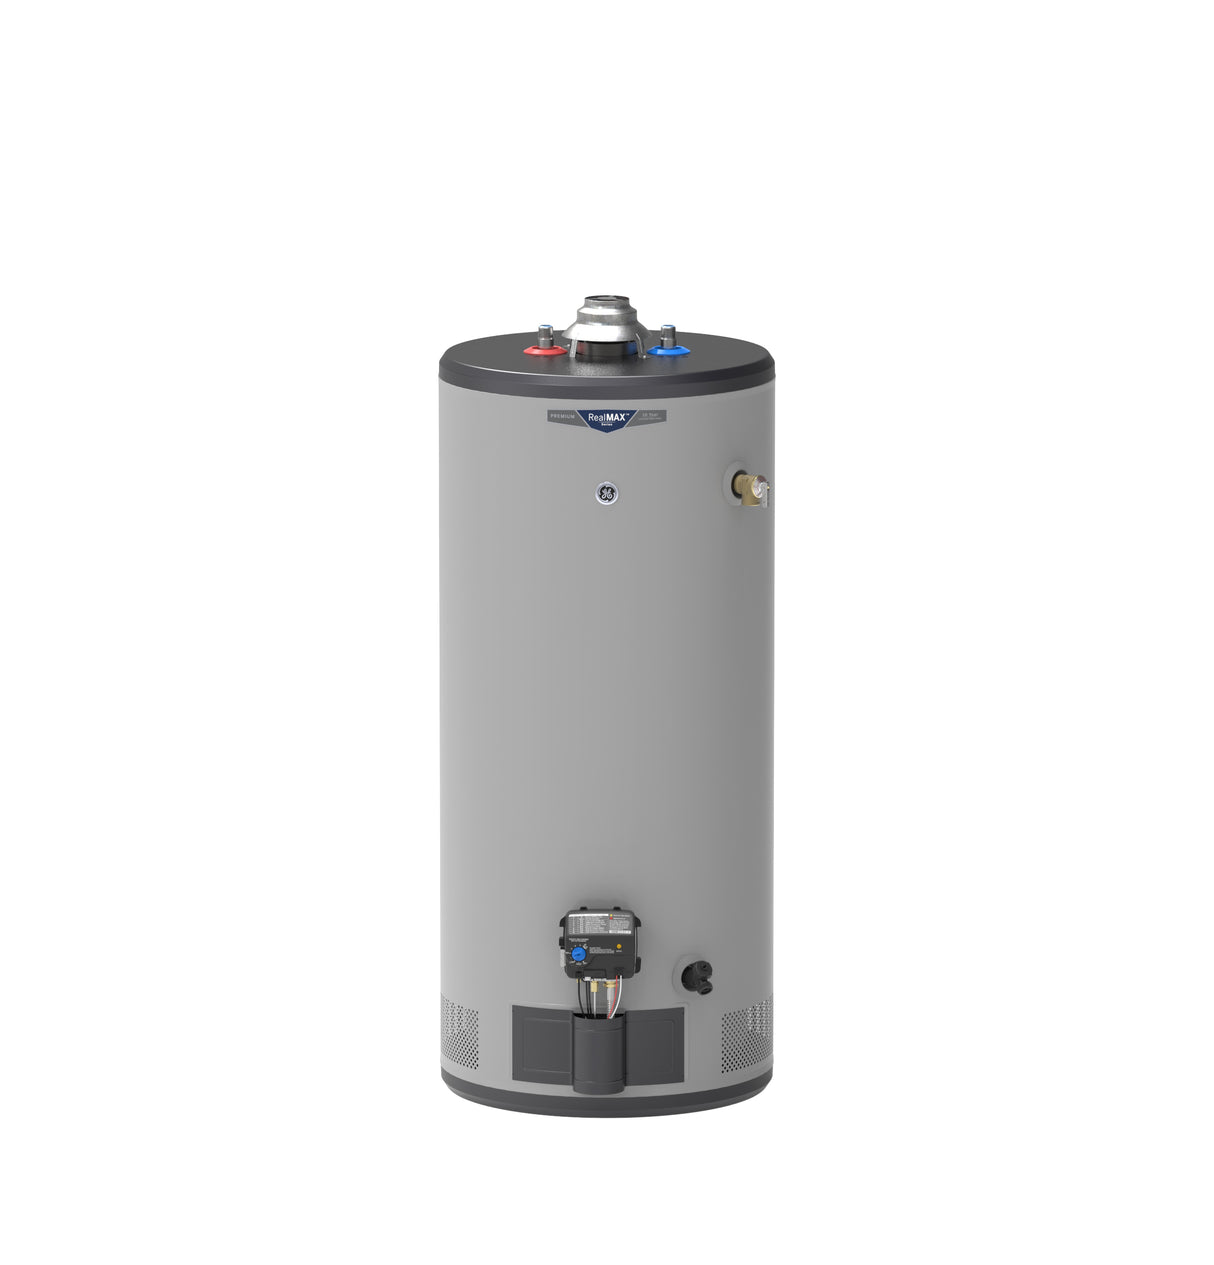 GE RealMAX Premium 40-Gallon Short Liquid Propane Atmospheric Water Heater - (GP40S10BXR)